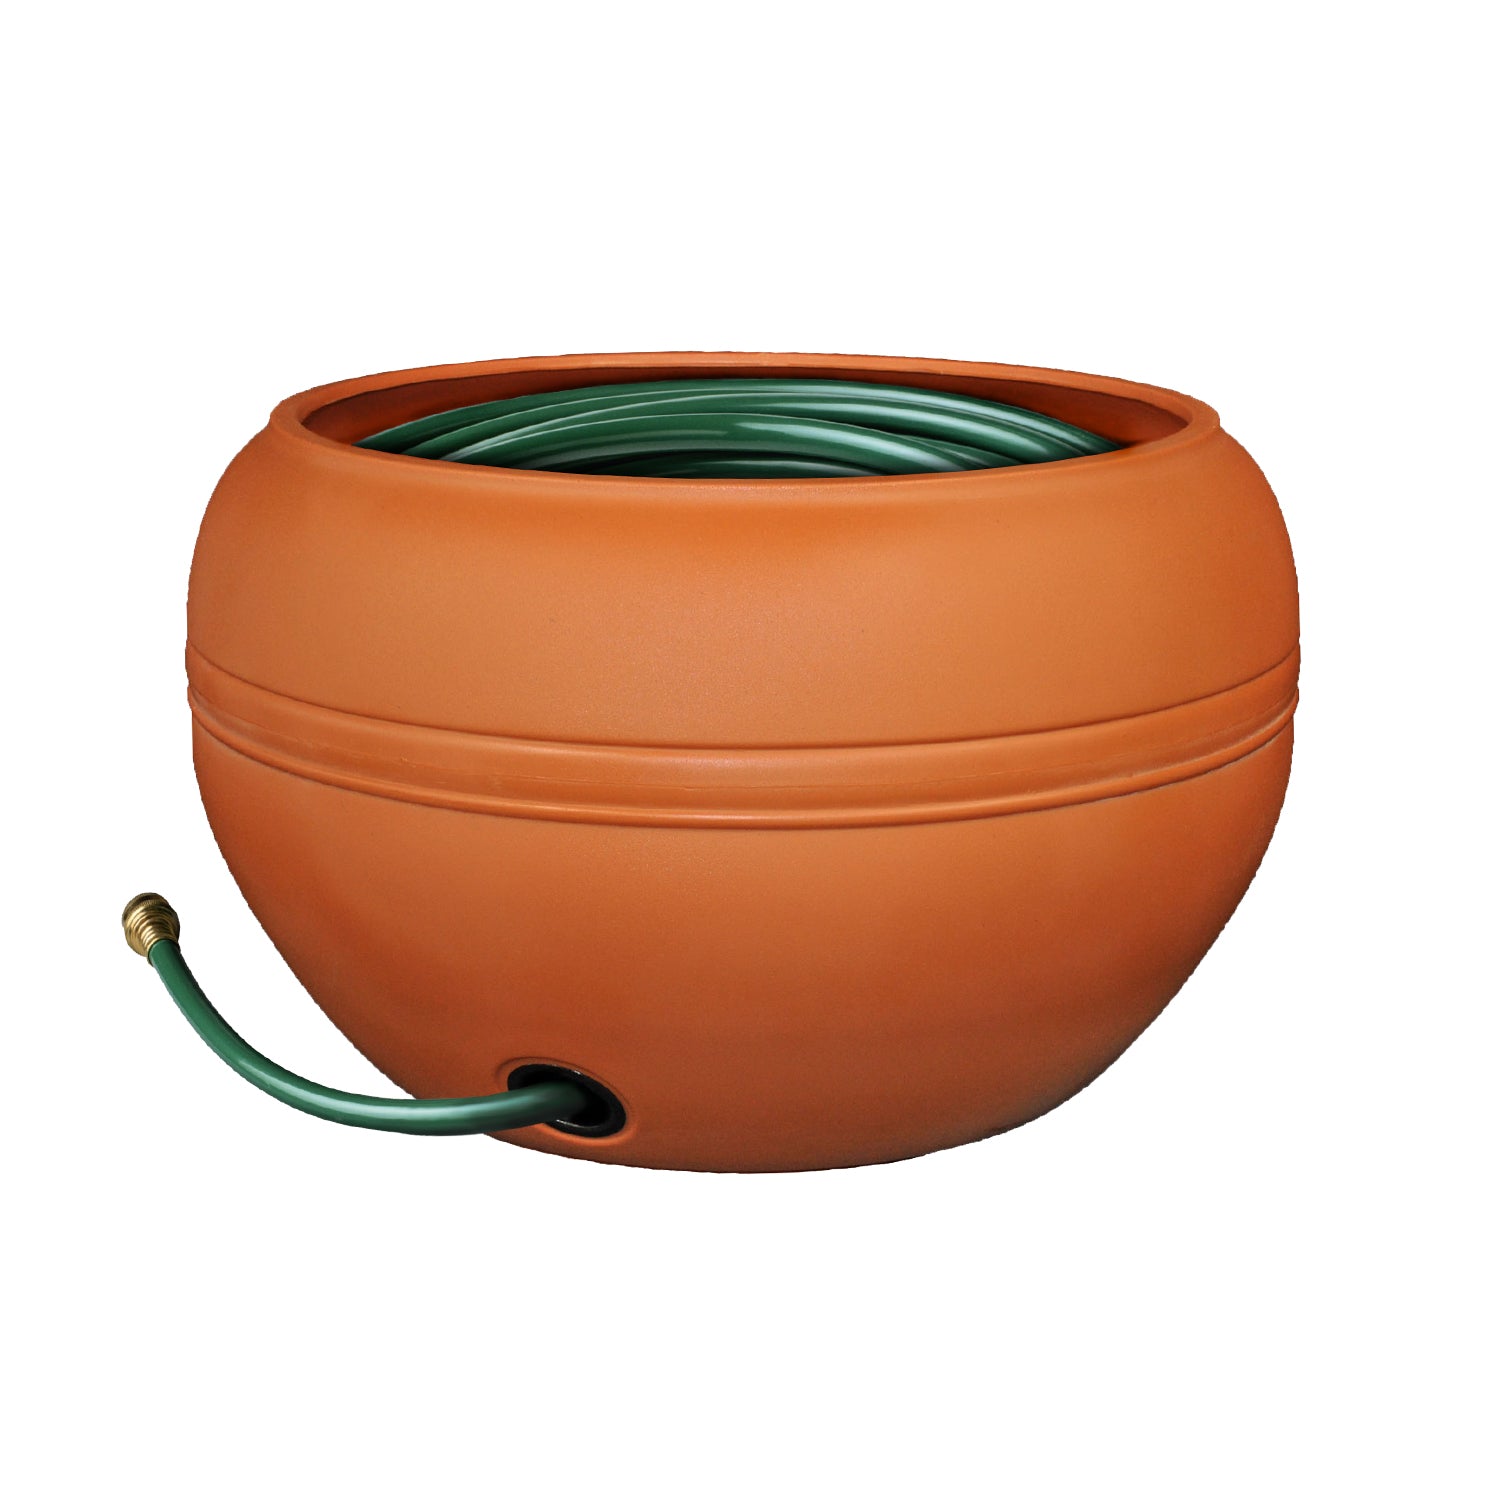 Tusco Products HP01TC Hose Pot, 20-Inch, Terra Cotta